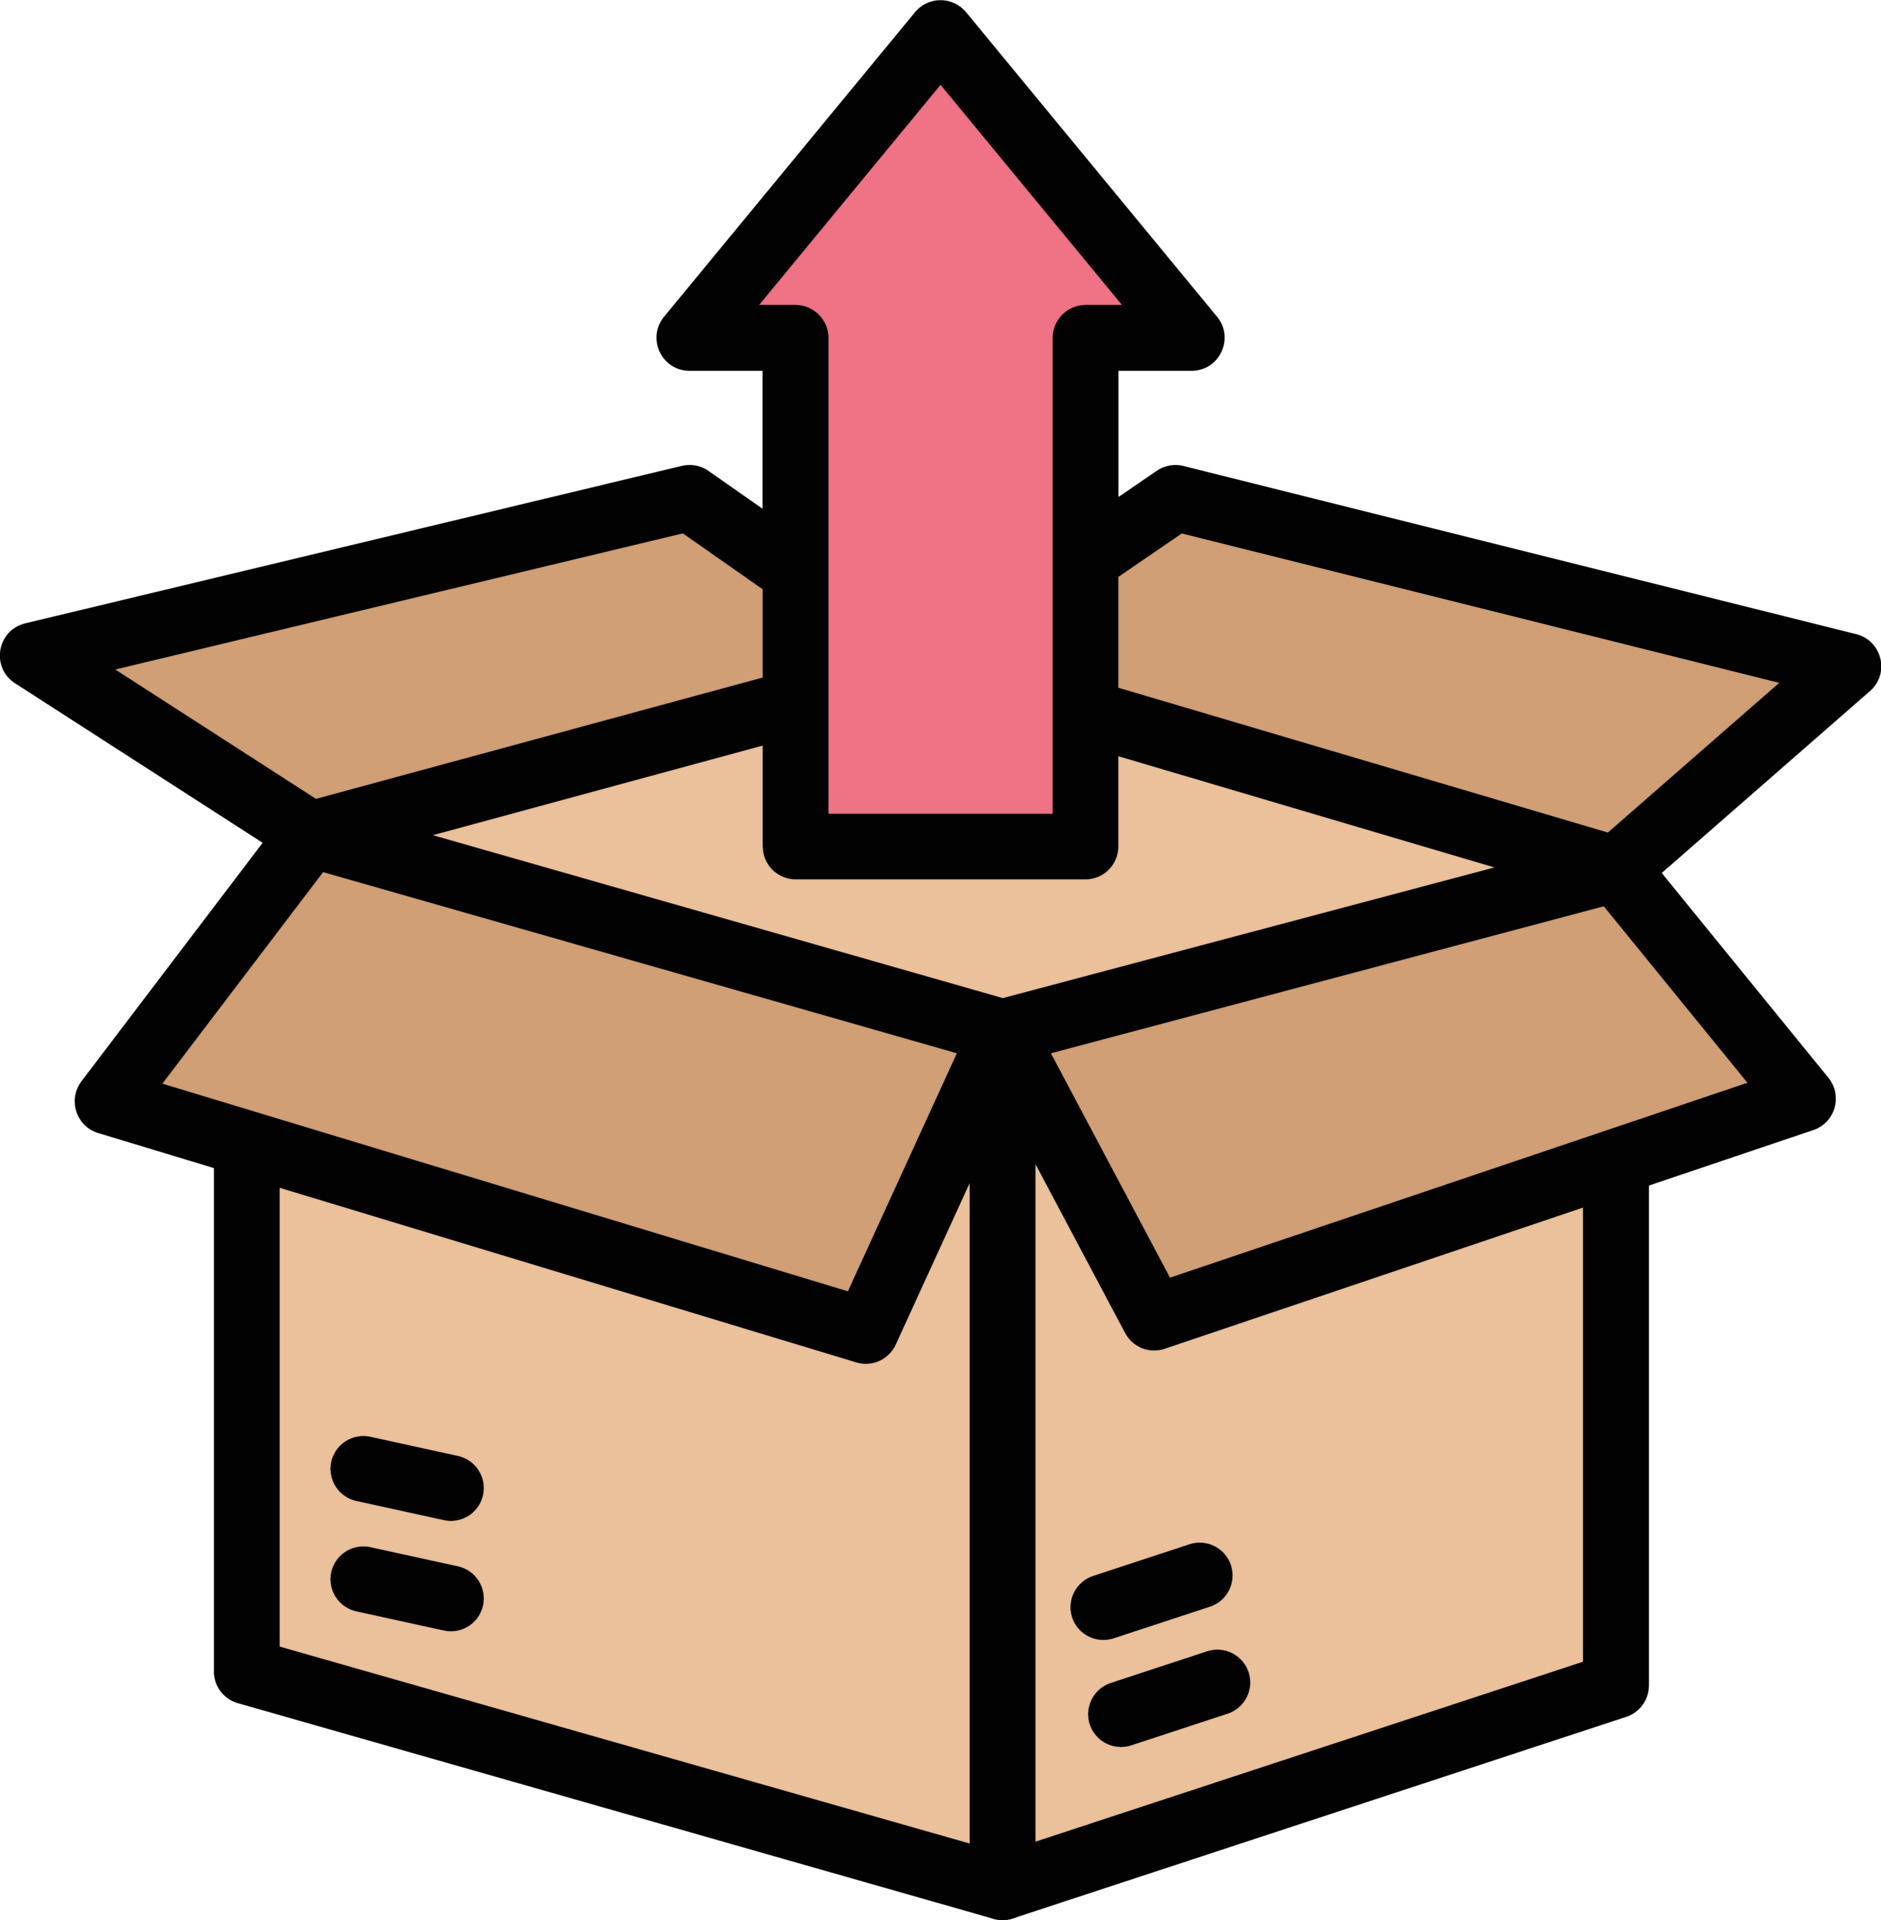 Premium Vector  Unpack package unboxing template box open vector